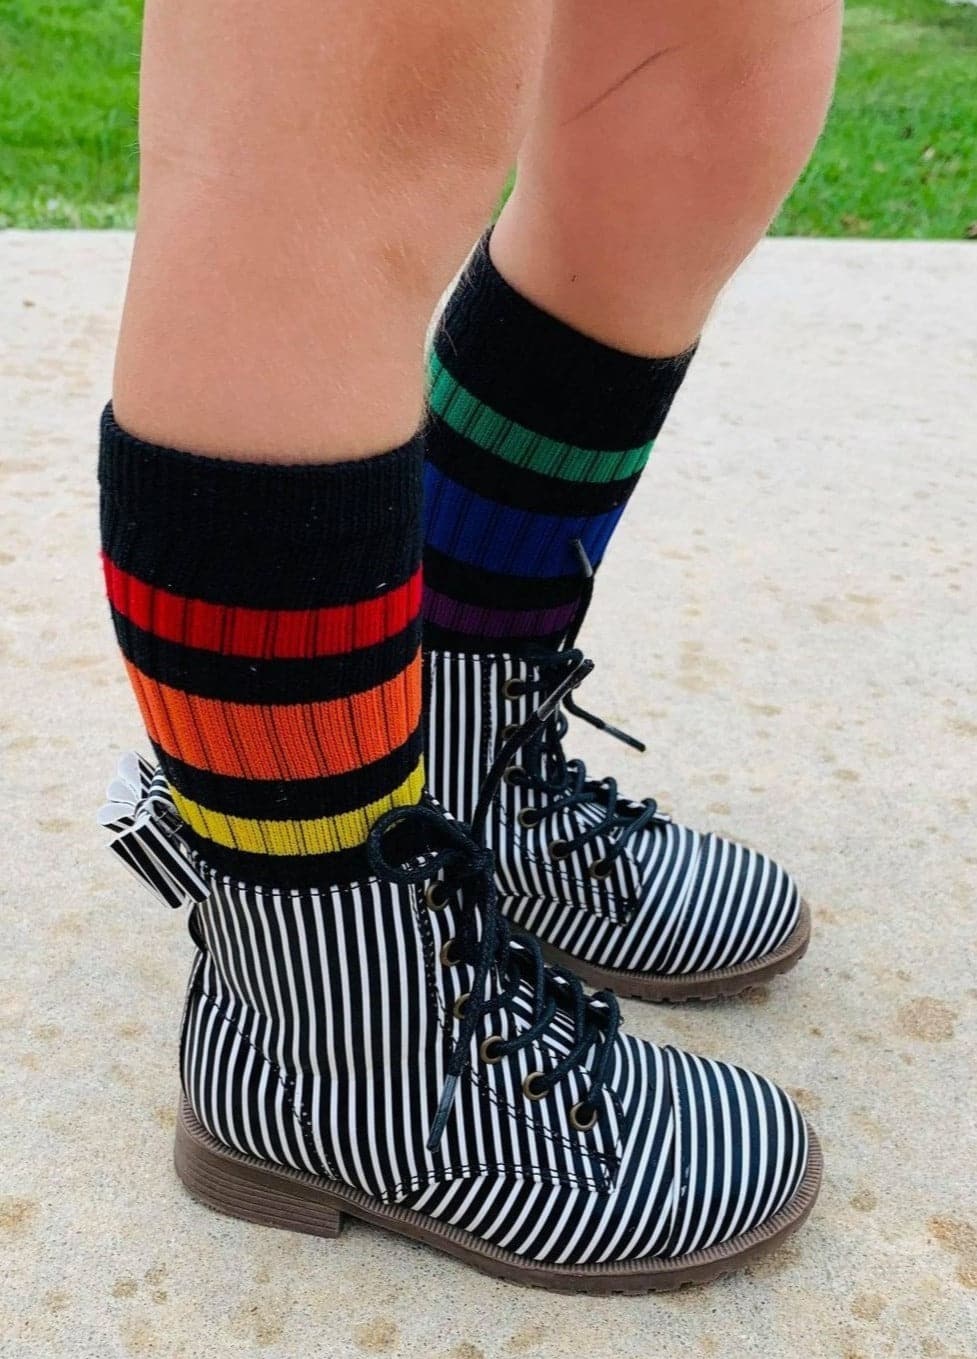 Socks - Rainbow & White Stripe